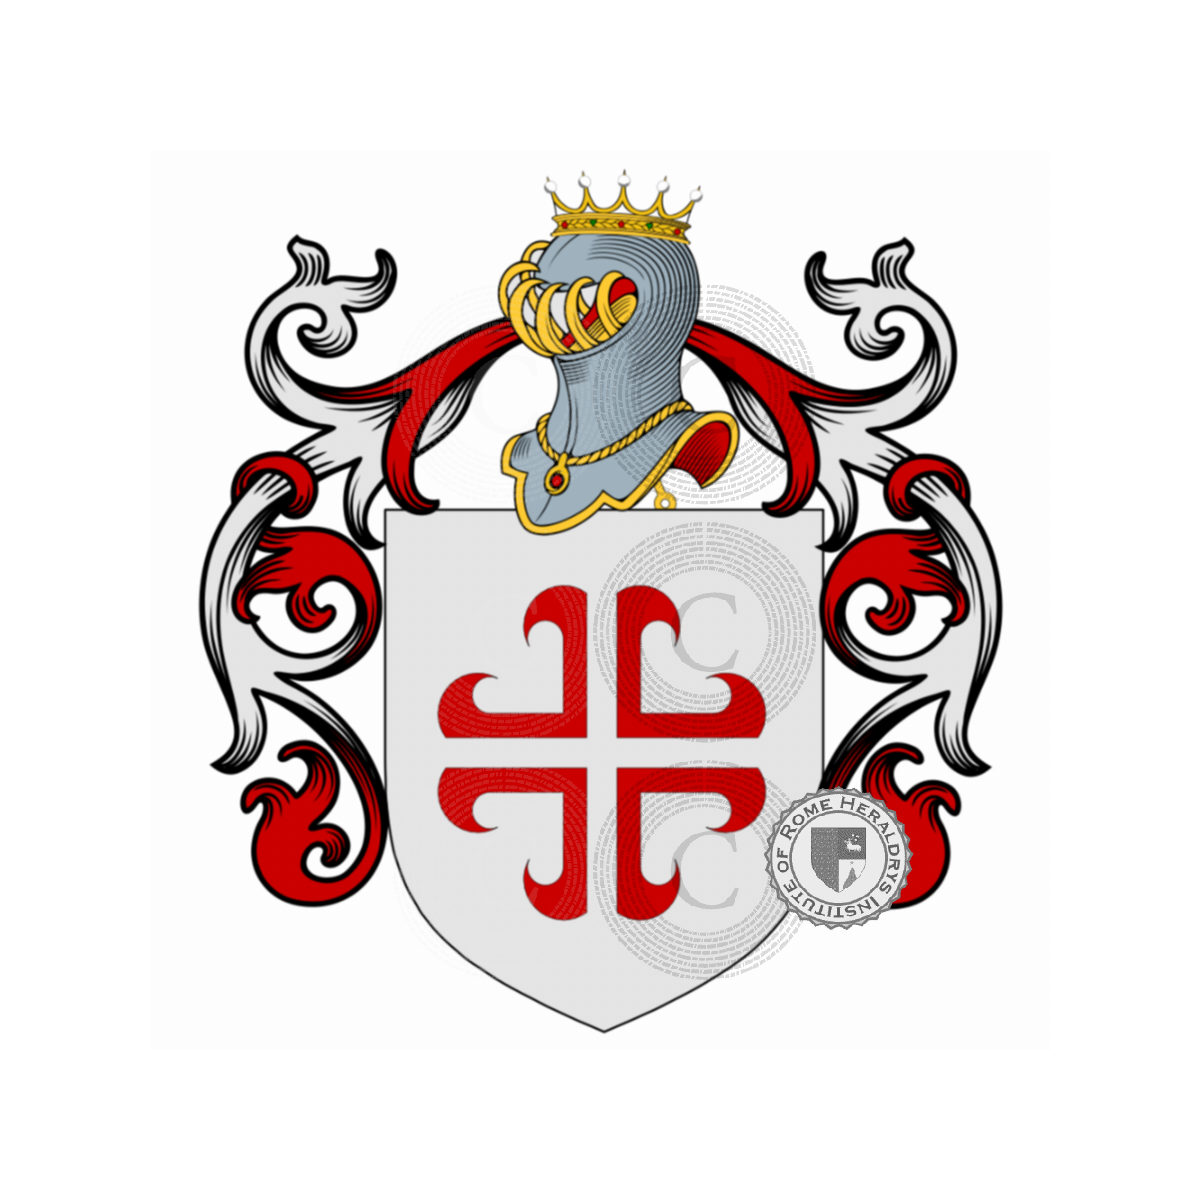 Wappen der FamilieBarberi, Barberis